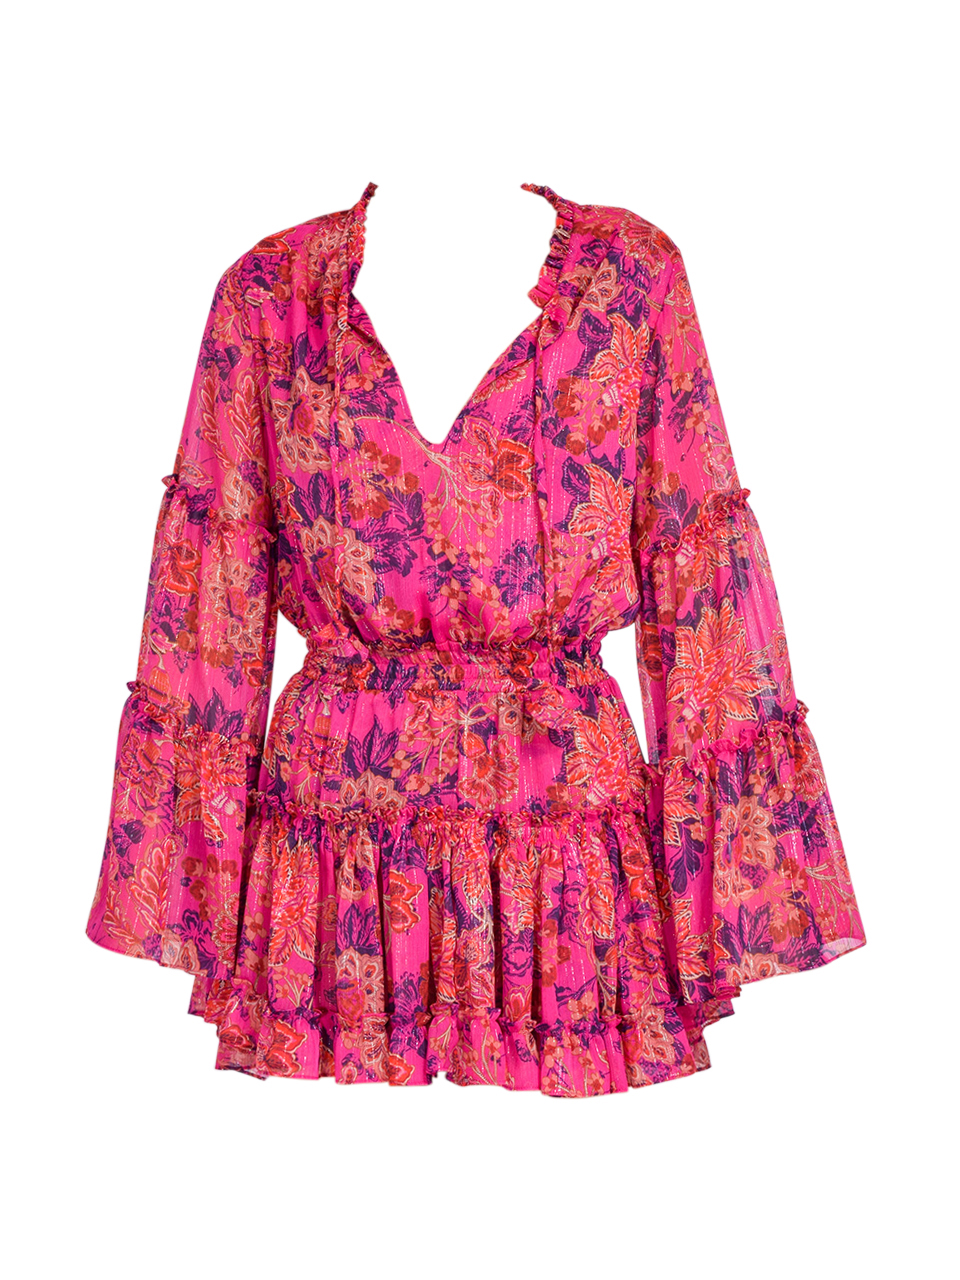 MISA LOS ANGELES Leeva Dress in Fuchsia Batik Product Shot 